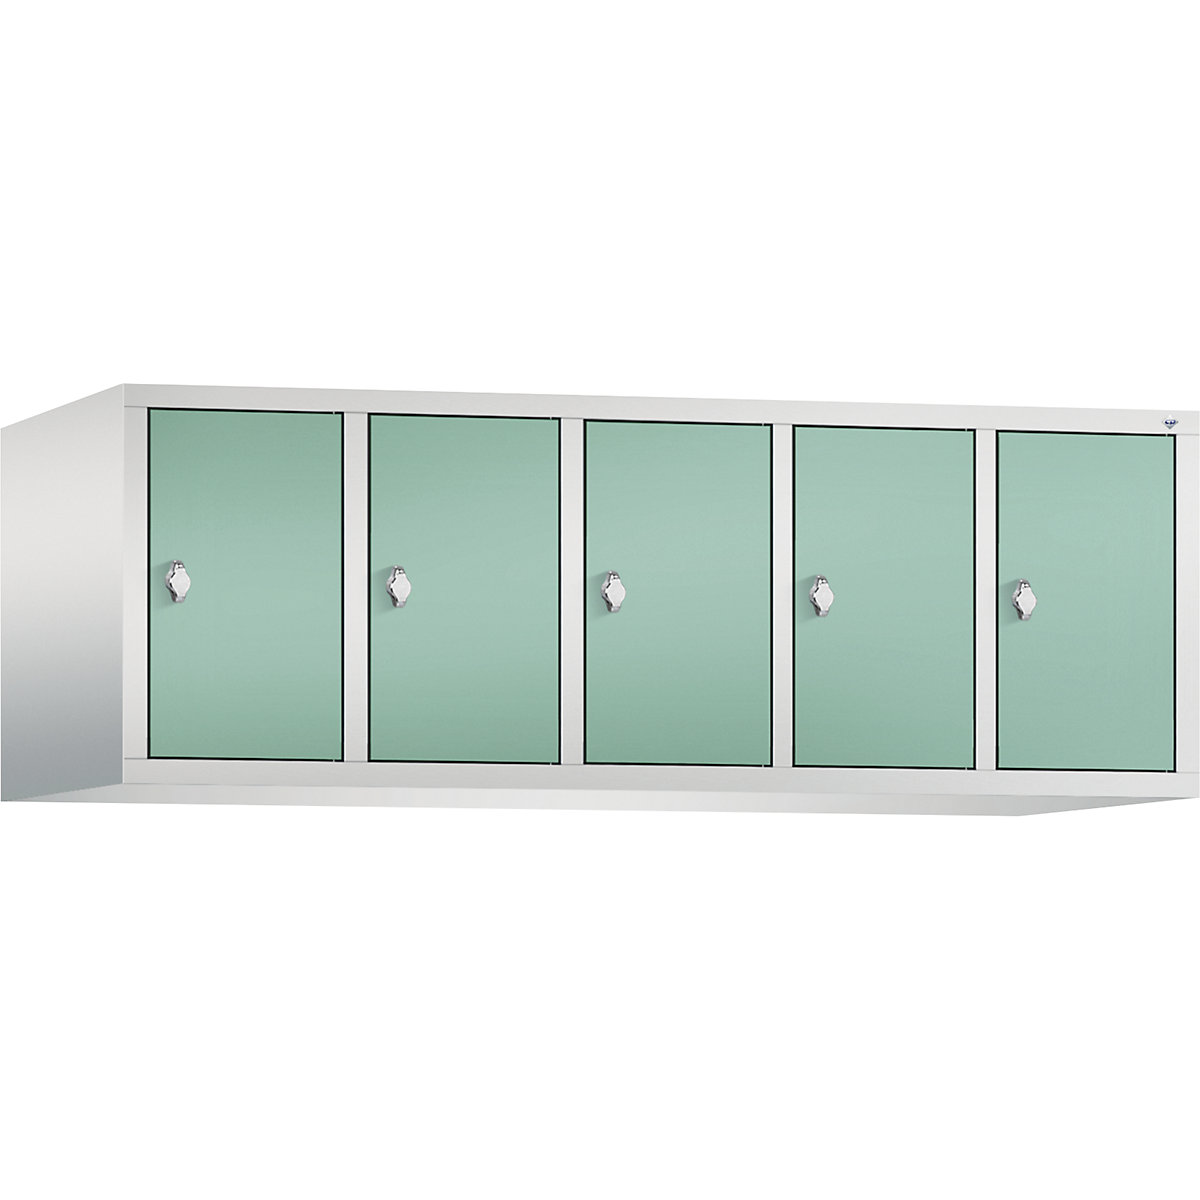 C+P – Altillo CLASSIC, 5 compartimentos, anchura de compartimento 300 mm, gris luminoso / verde luminoso